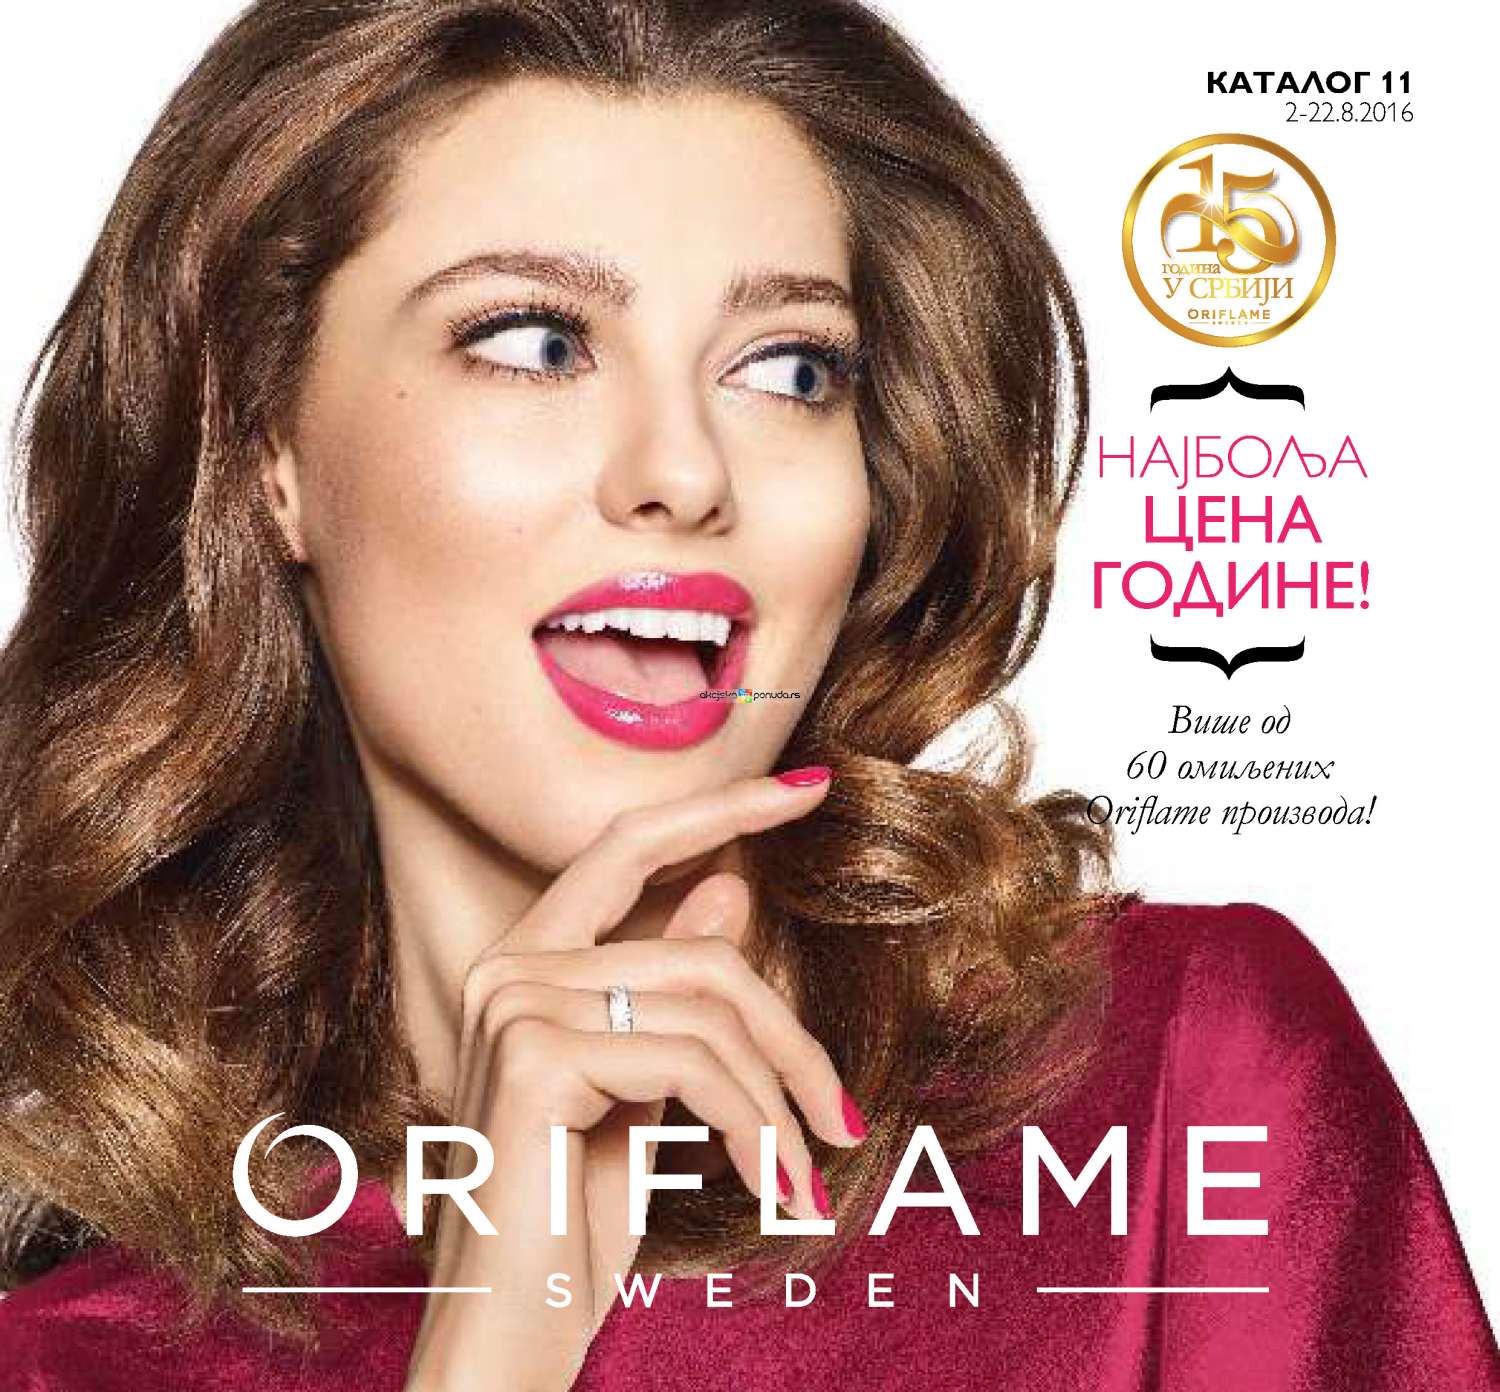 Oriflame katalog kozmetike 02-22. avgust 2016 42098